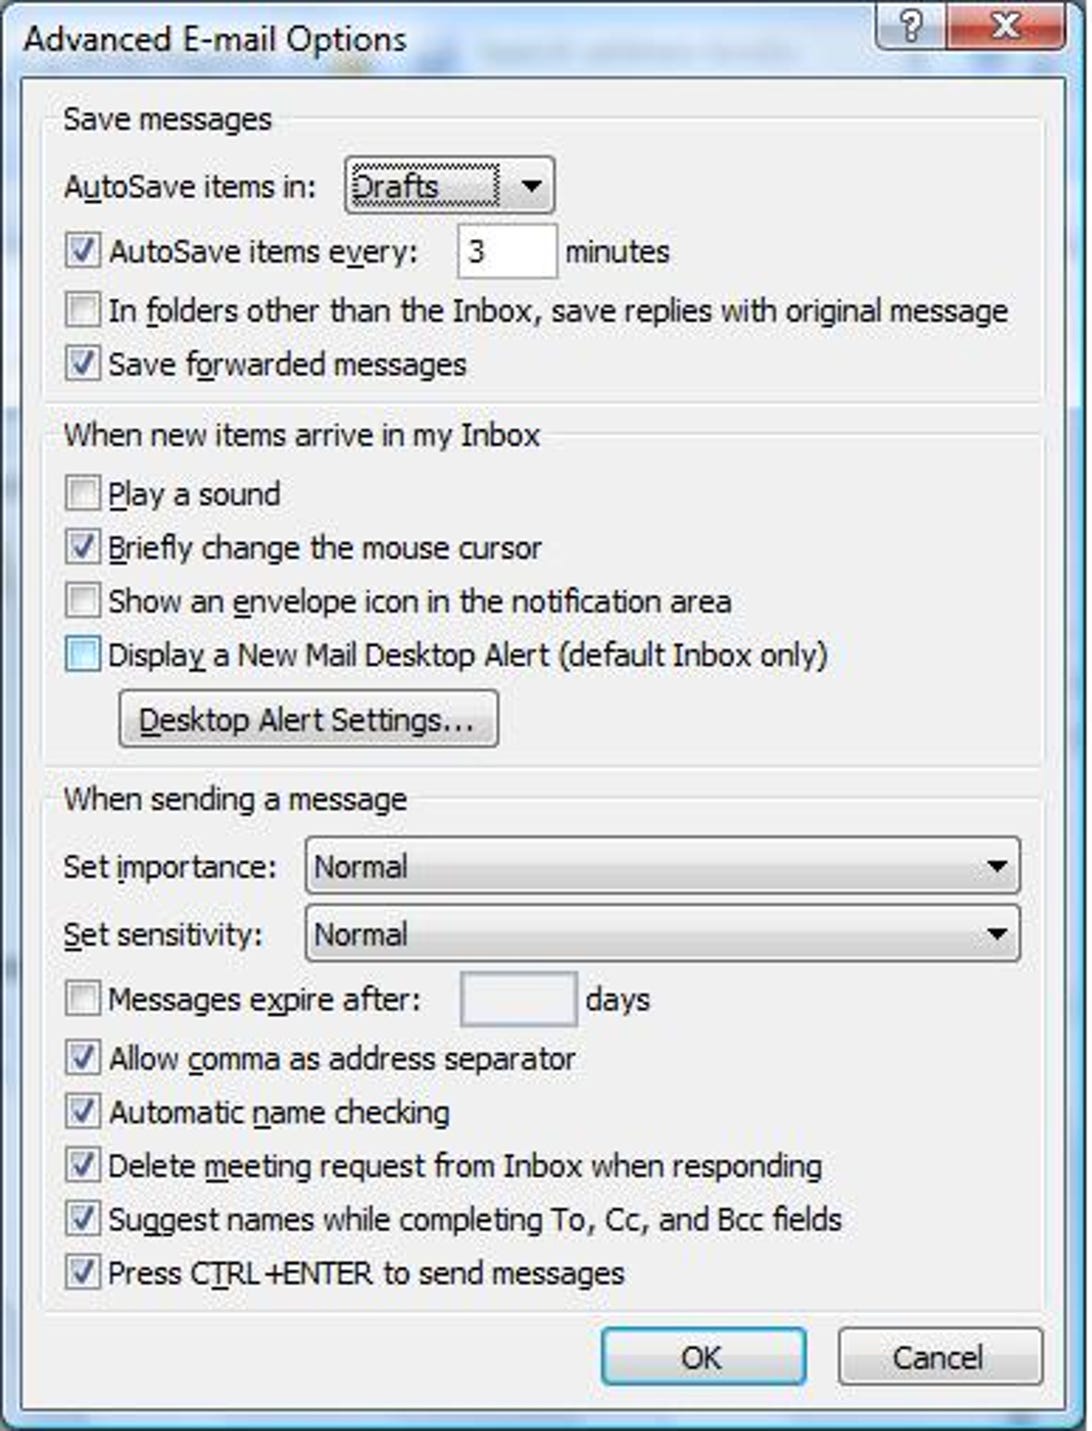 Microsoft Outlook 2007 Advanced E-mail Options dialog